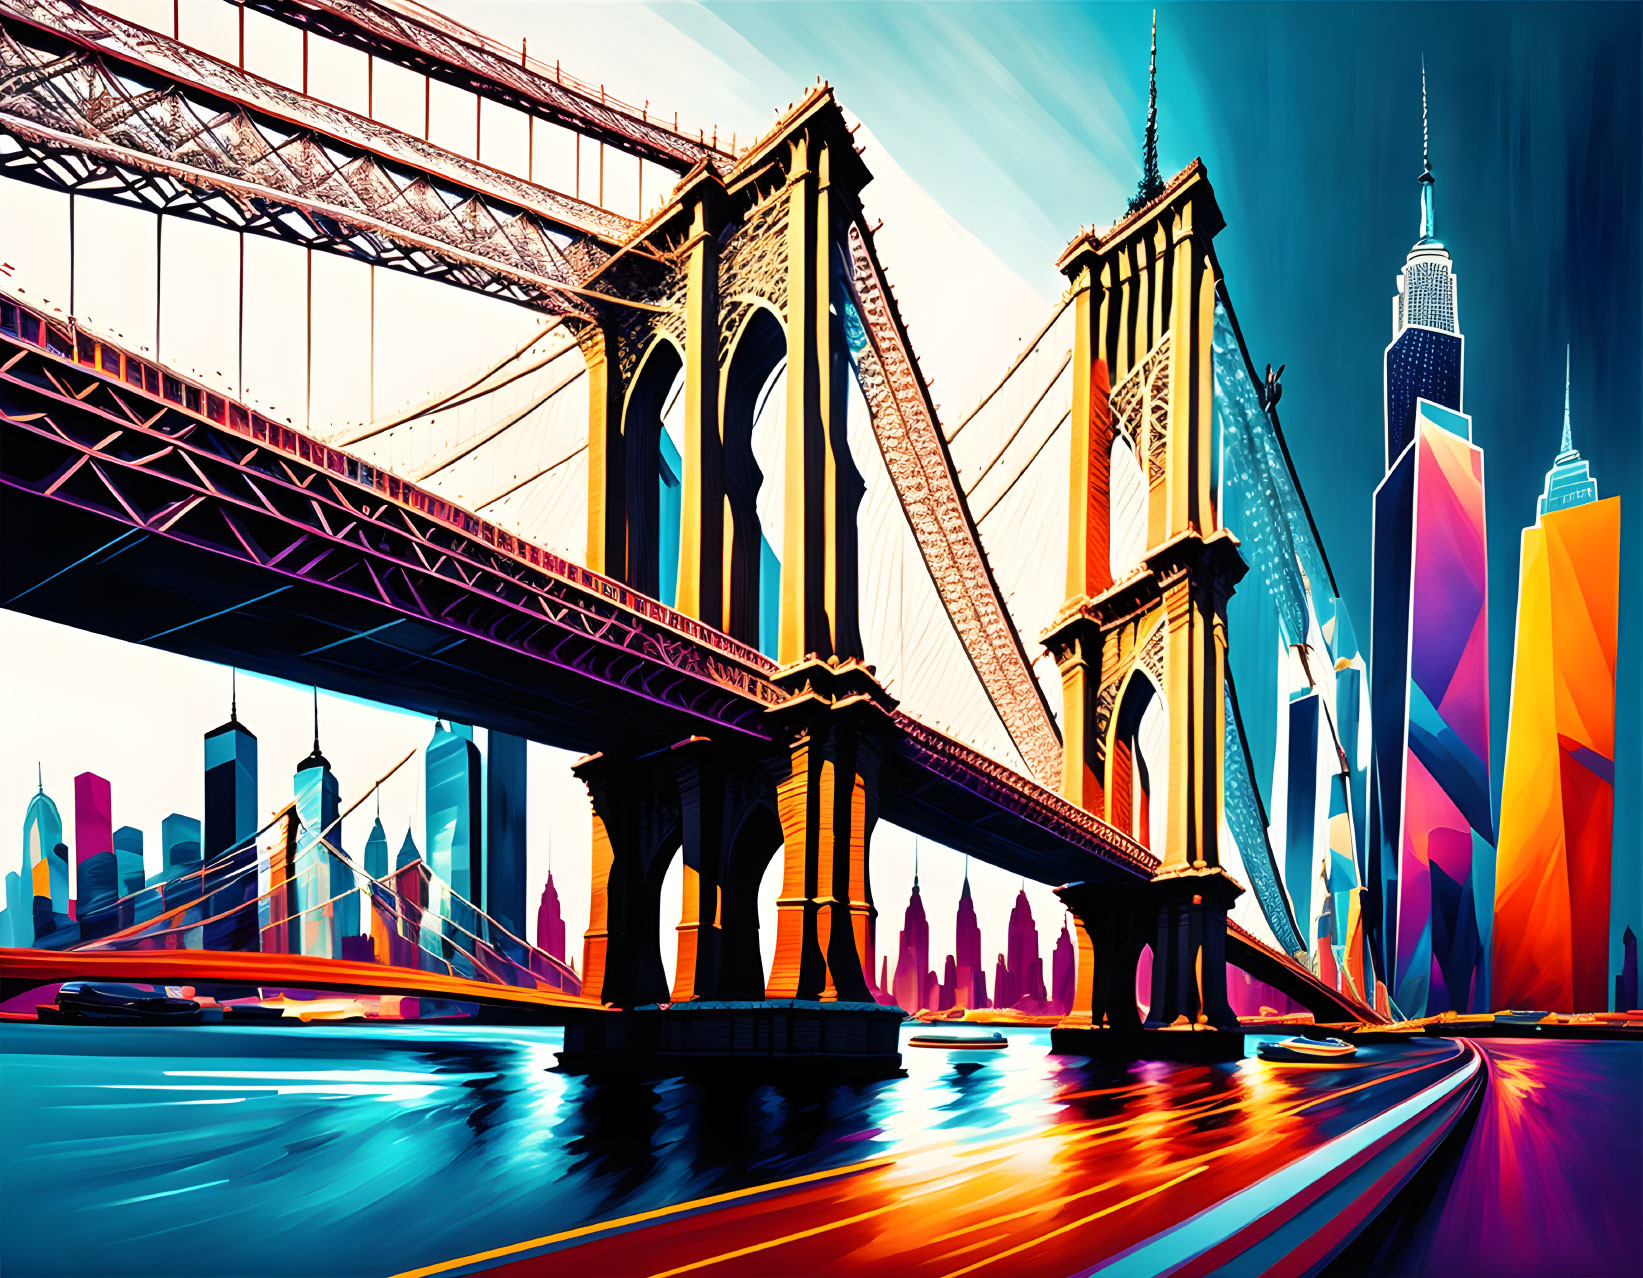 Colorful illustration: Brooklyn Bridge & Manhattan skyline with dynamic lighting